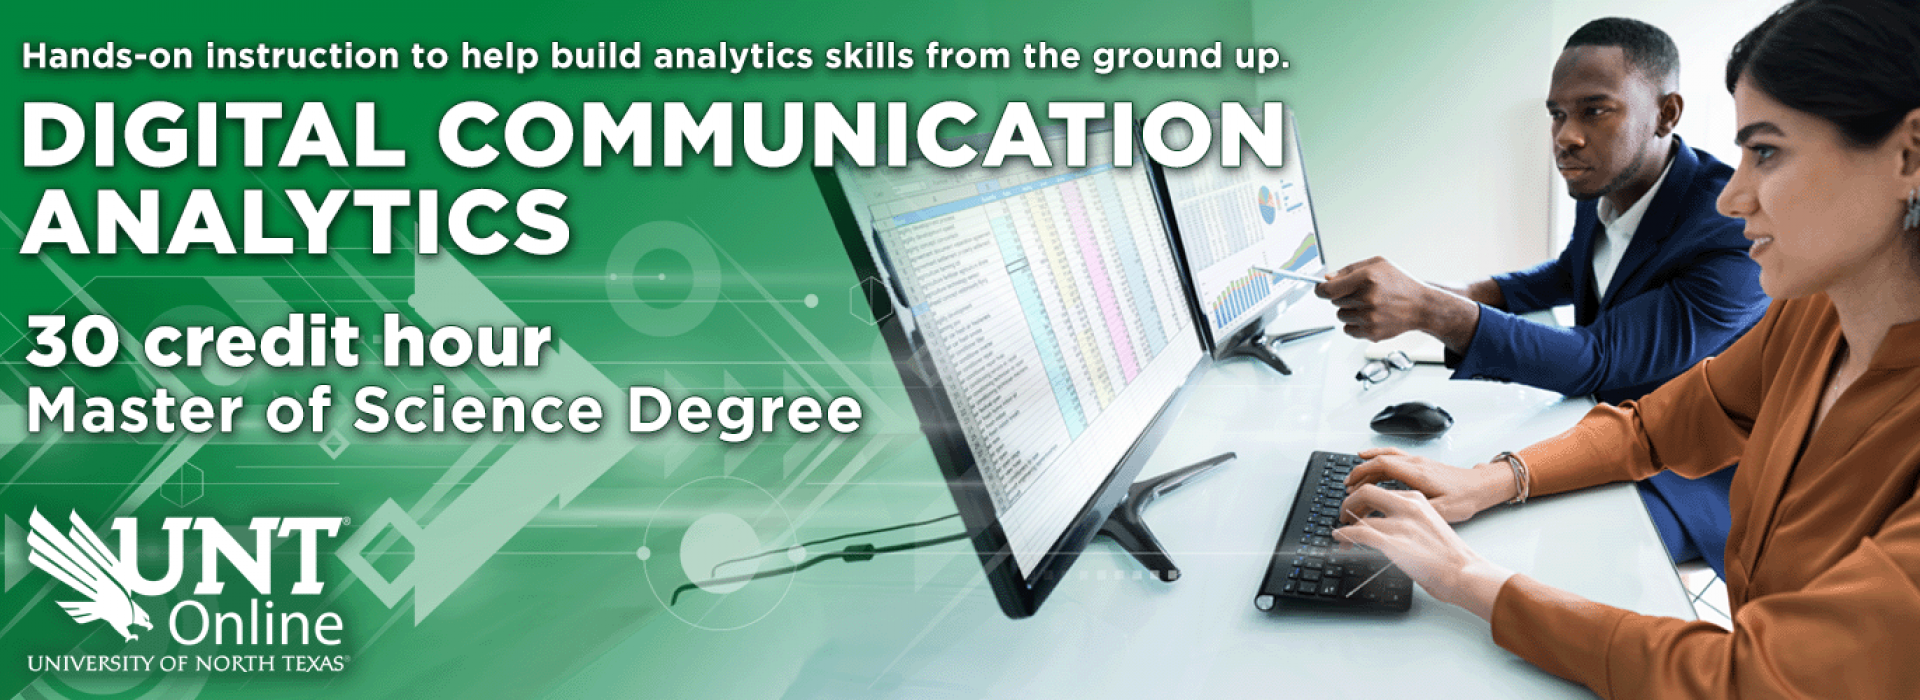 Digital Communication Analytics 30 Credit hour Master of Science Degree